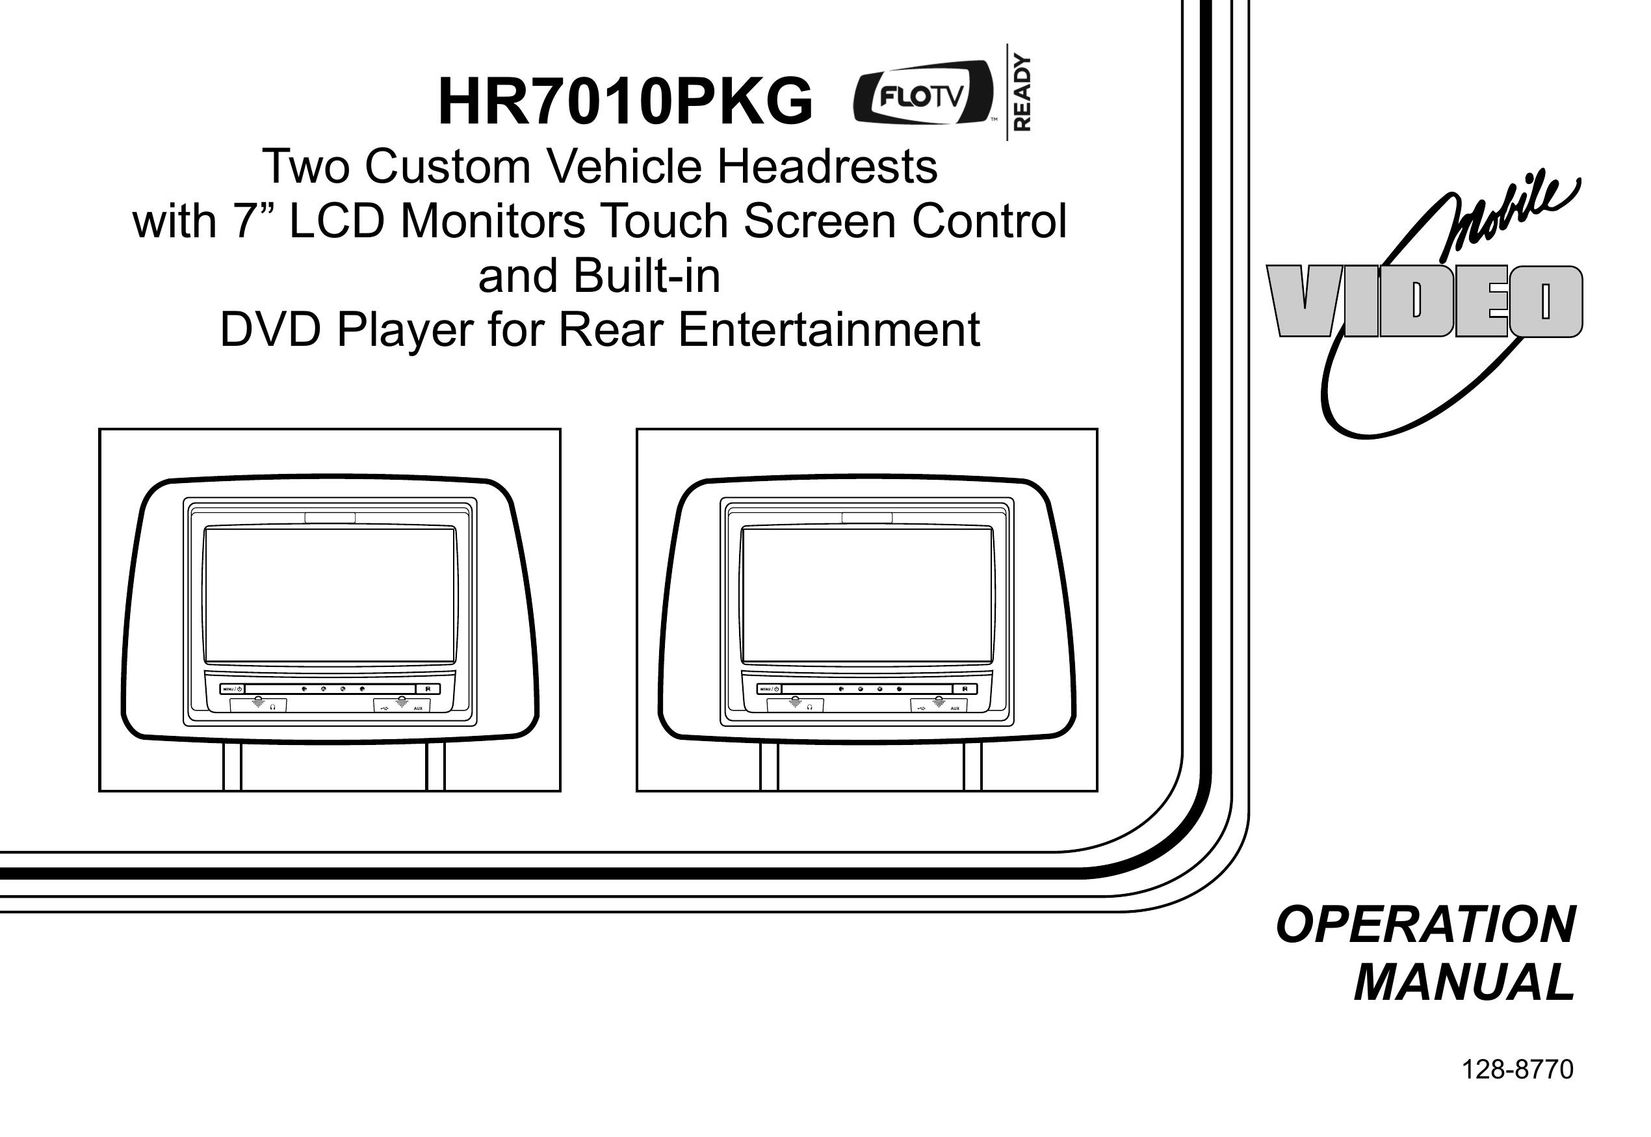 Audiovox HR7010PKG Car Video System User Manual